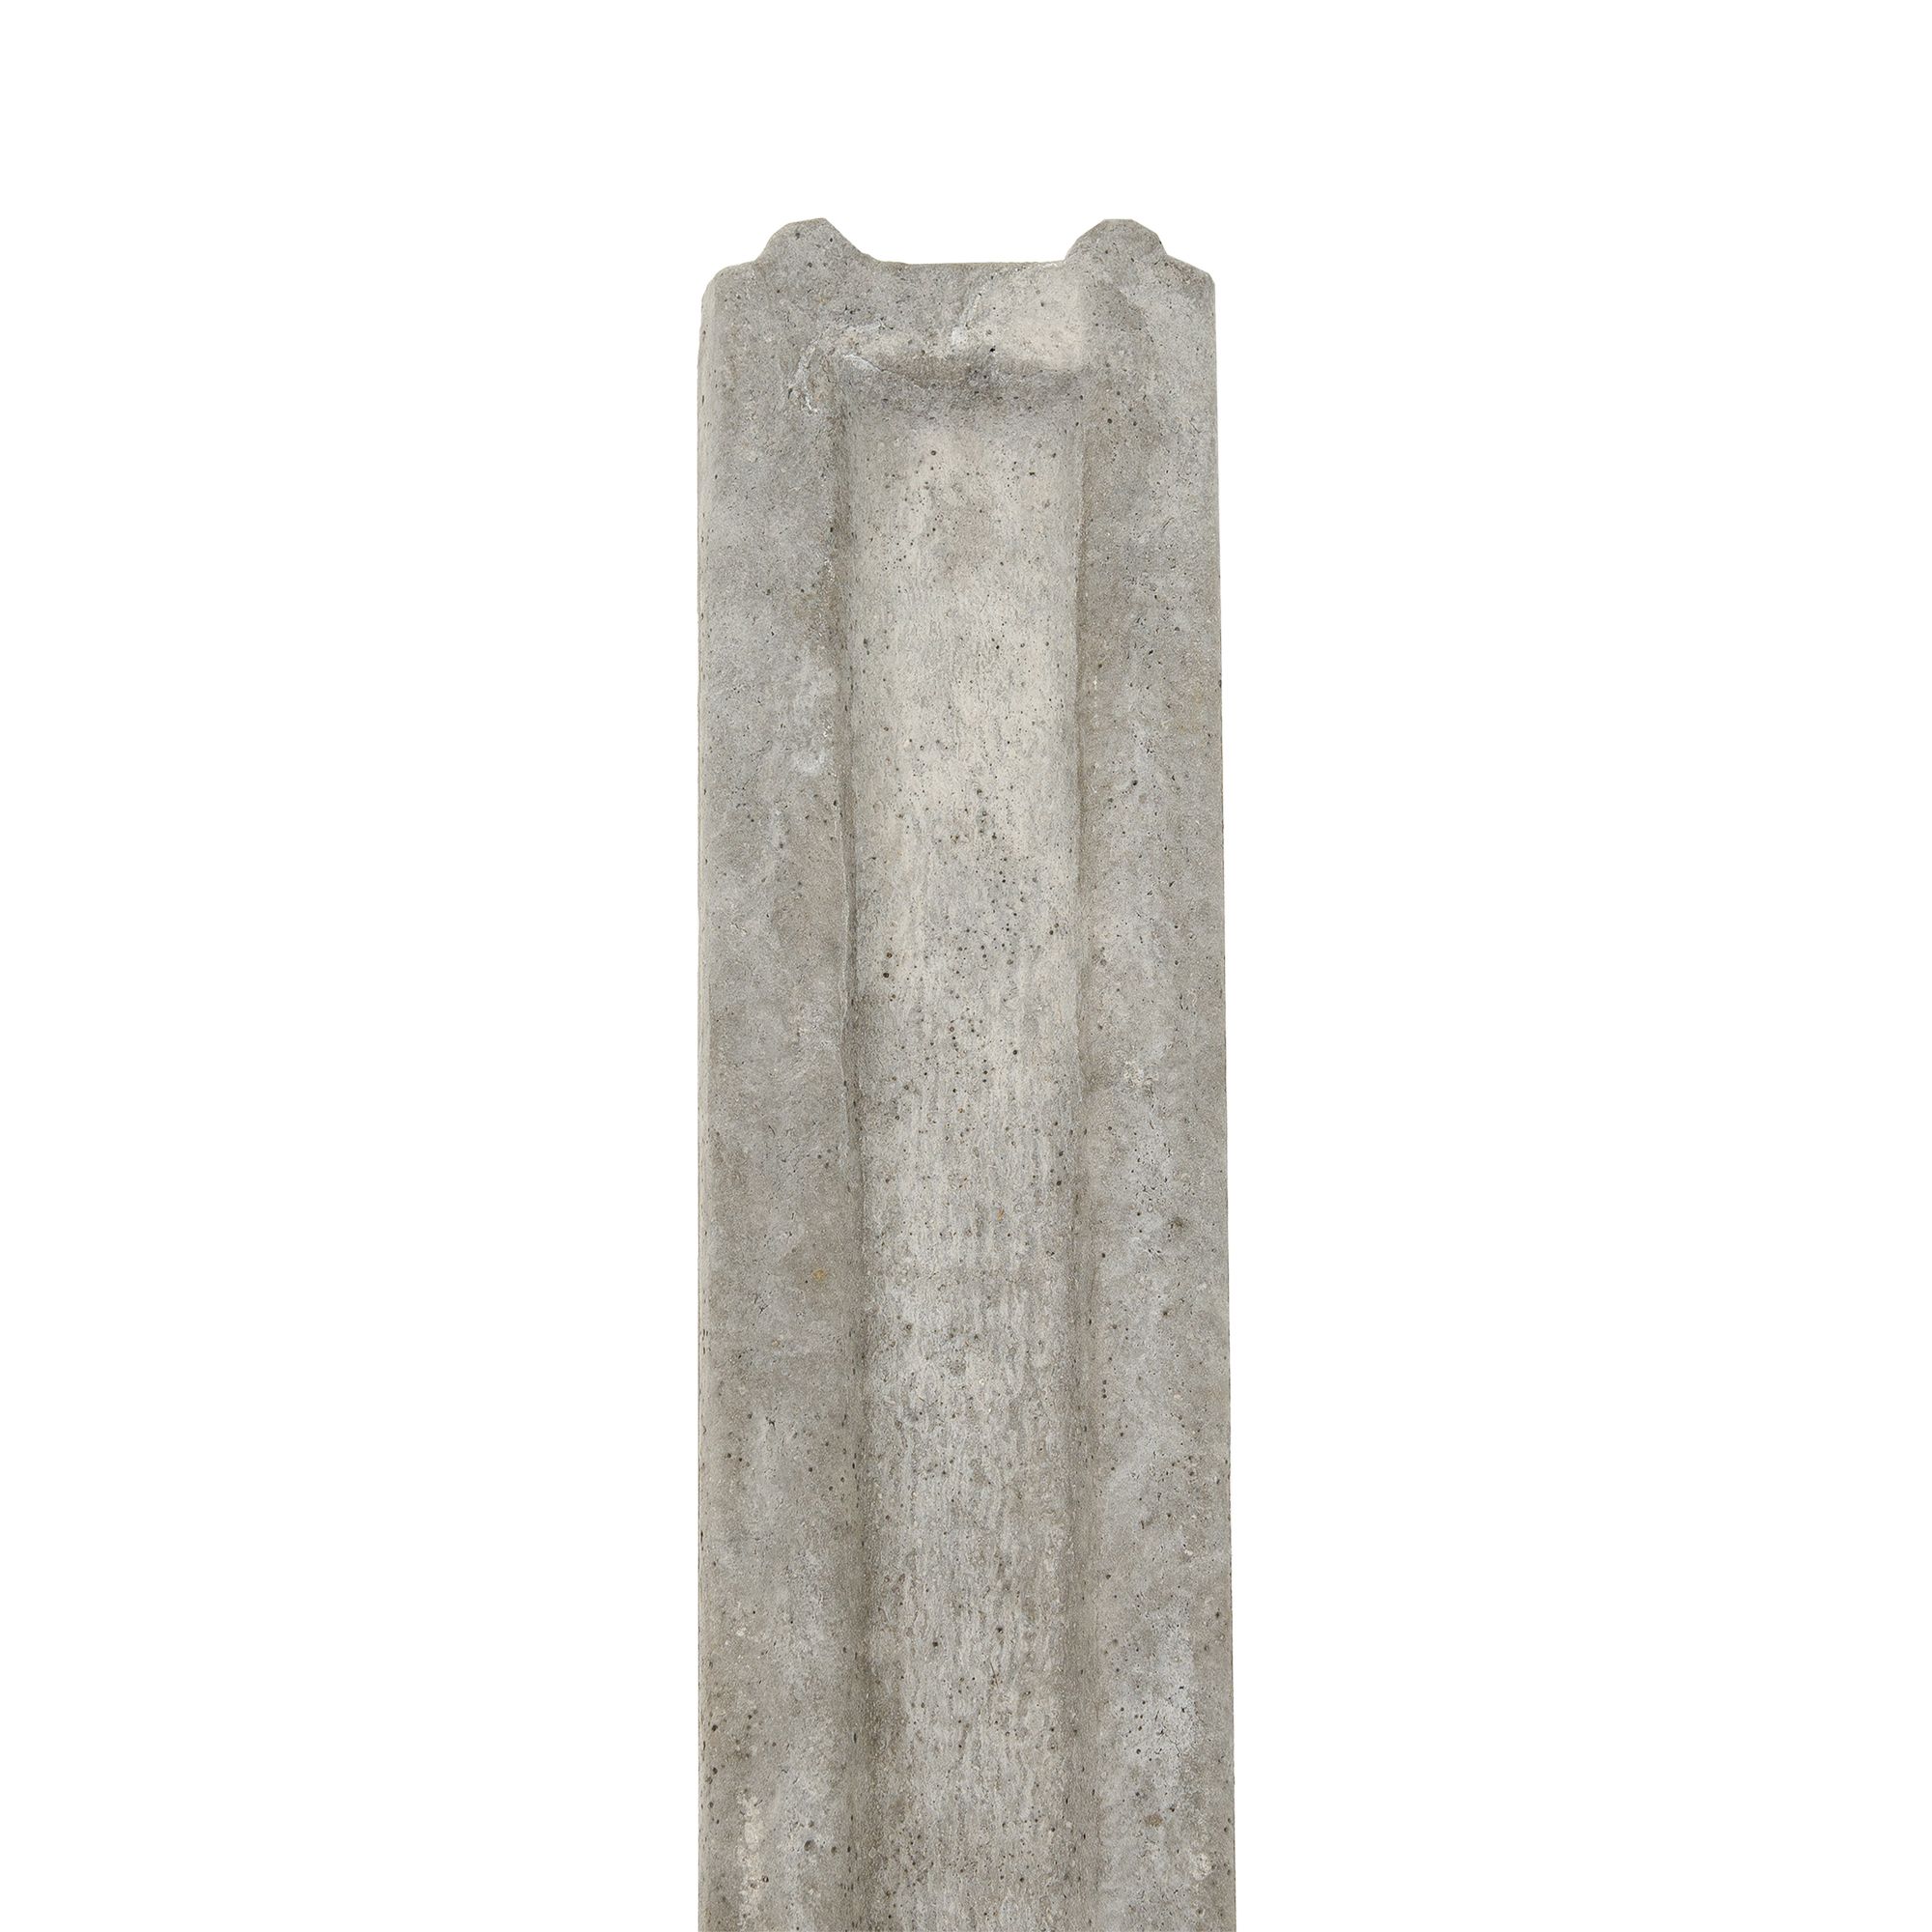 Concrete Gravel board (L)1.83m (W)150mm (T)50mm, Pack of 3